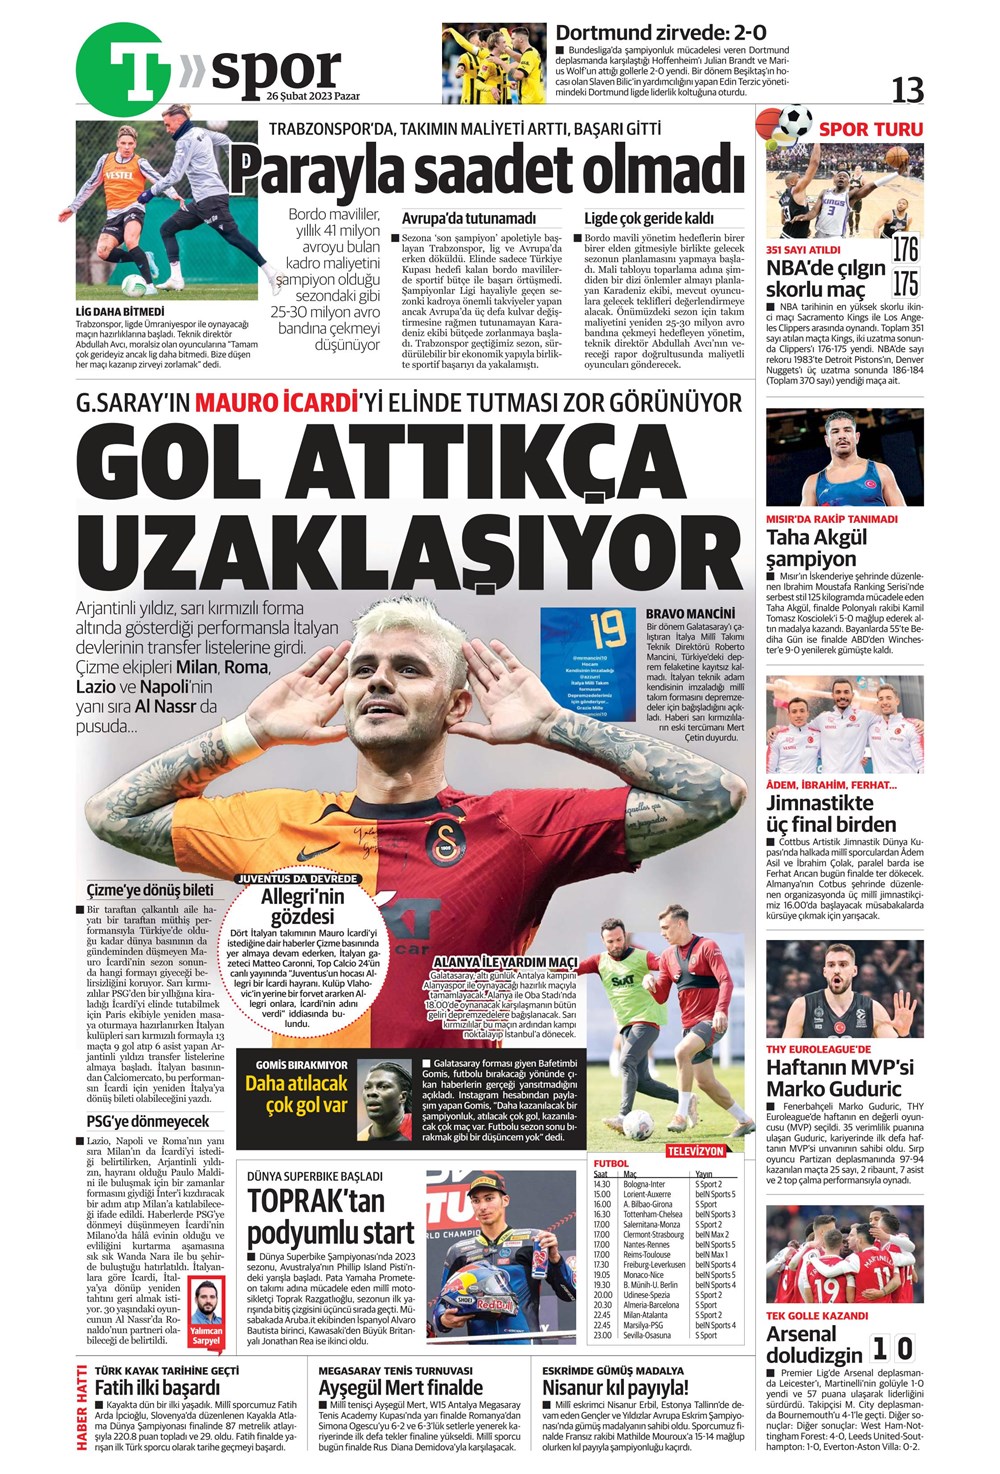 "Valenci'ağa' böyle istedi" - Sporun manşetleri  - 33. Foto